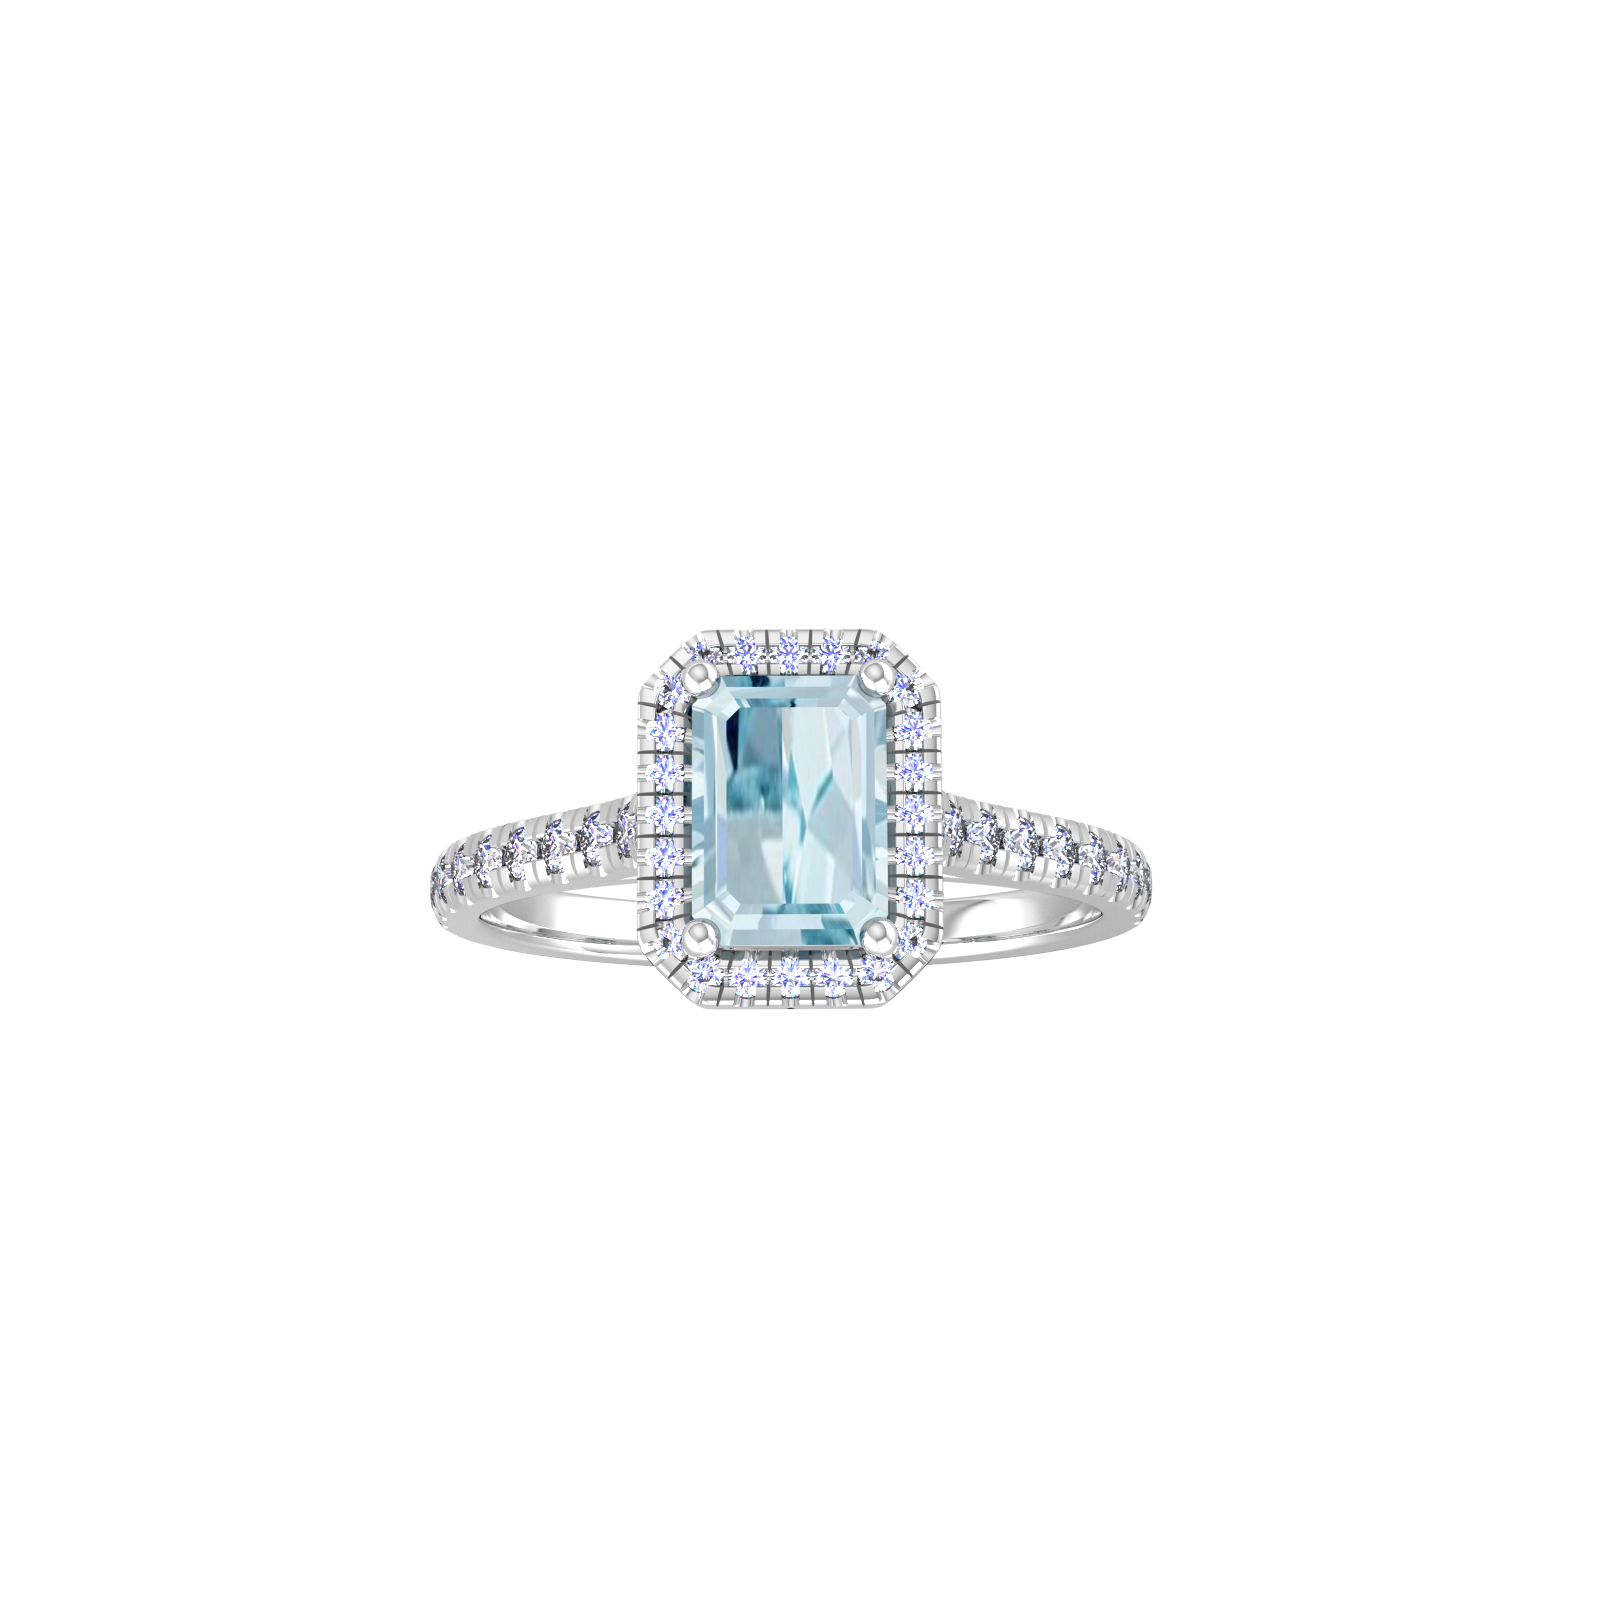 9ct White Gold Aquamarine & Diamond Halo Ring with Diamond Shoulders - Ring Size J